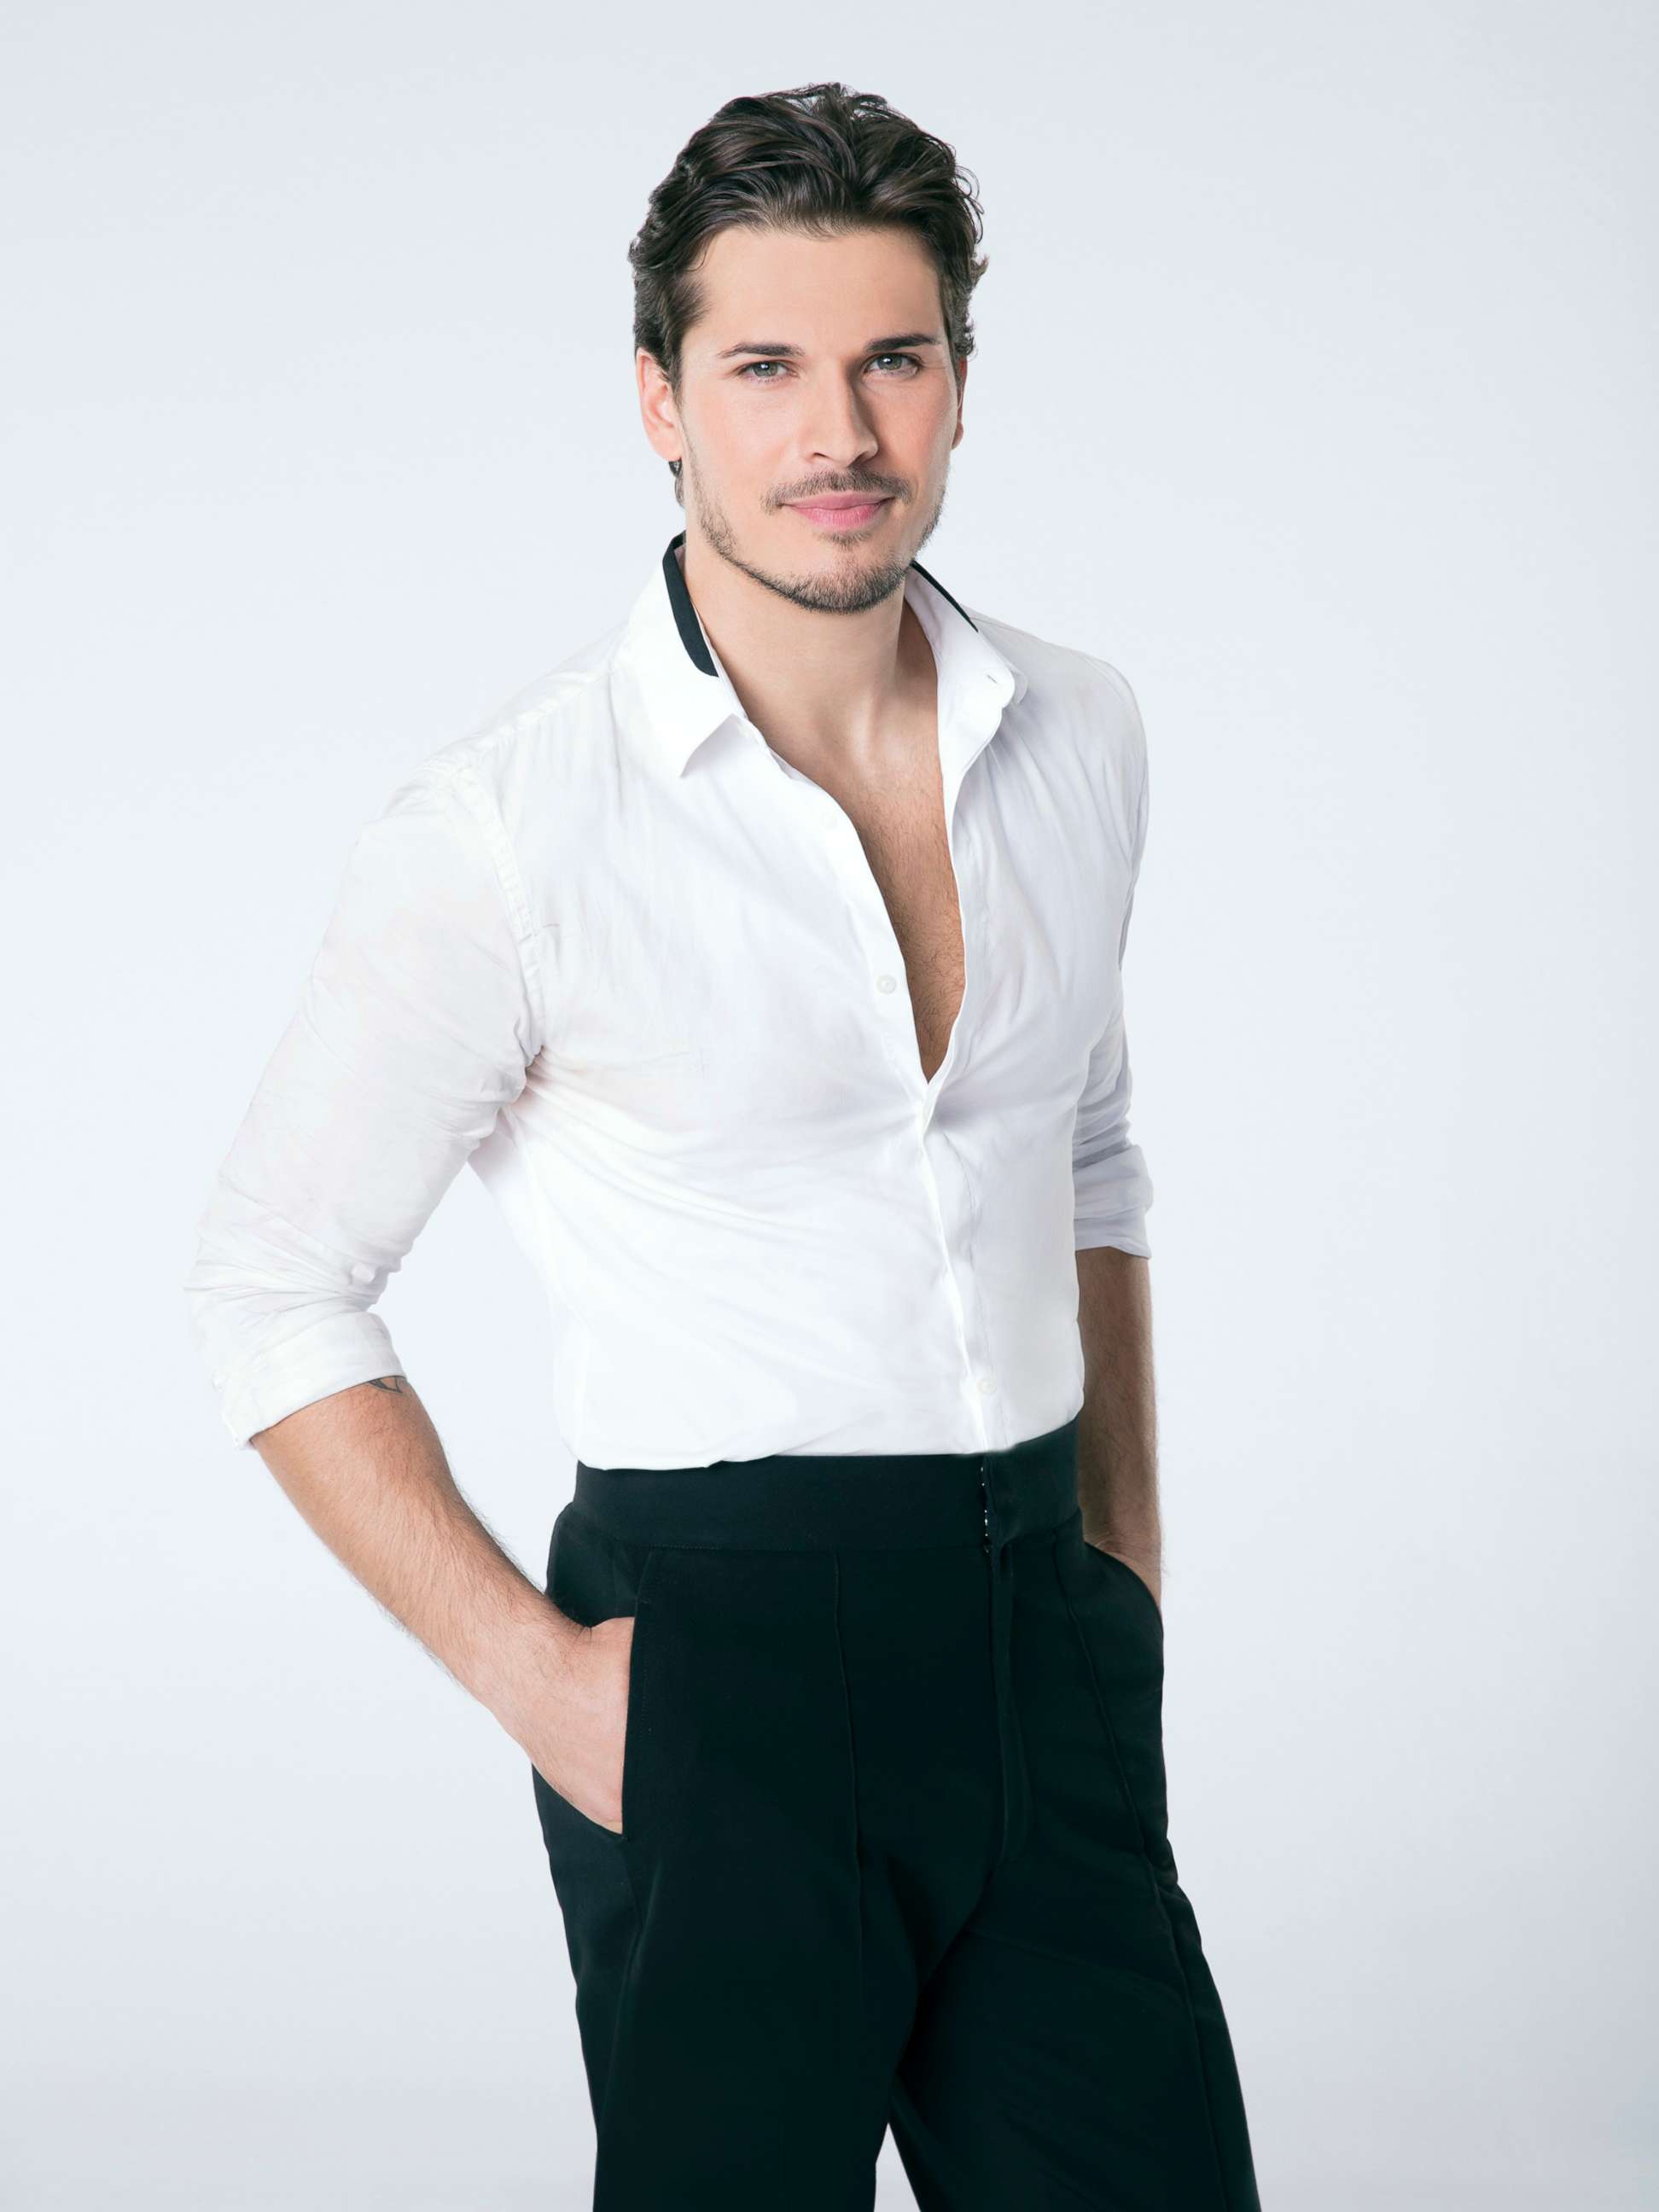 PHOTO: Pro dancer Gleb Savchenko will appear on "Dancing With The Stars."